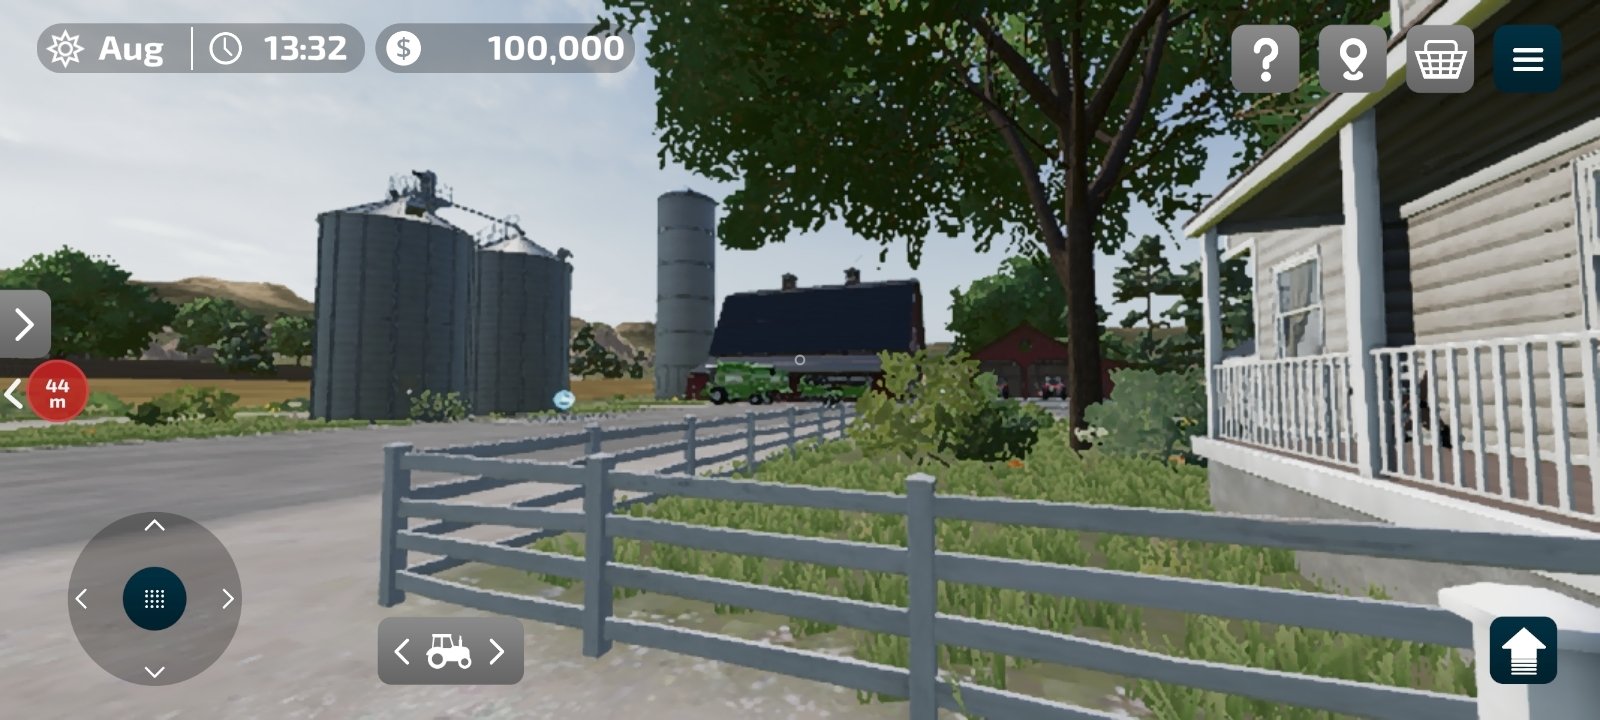 Farming Simulator 19 Free Download